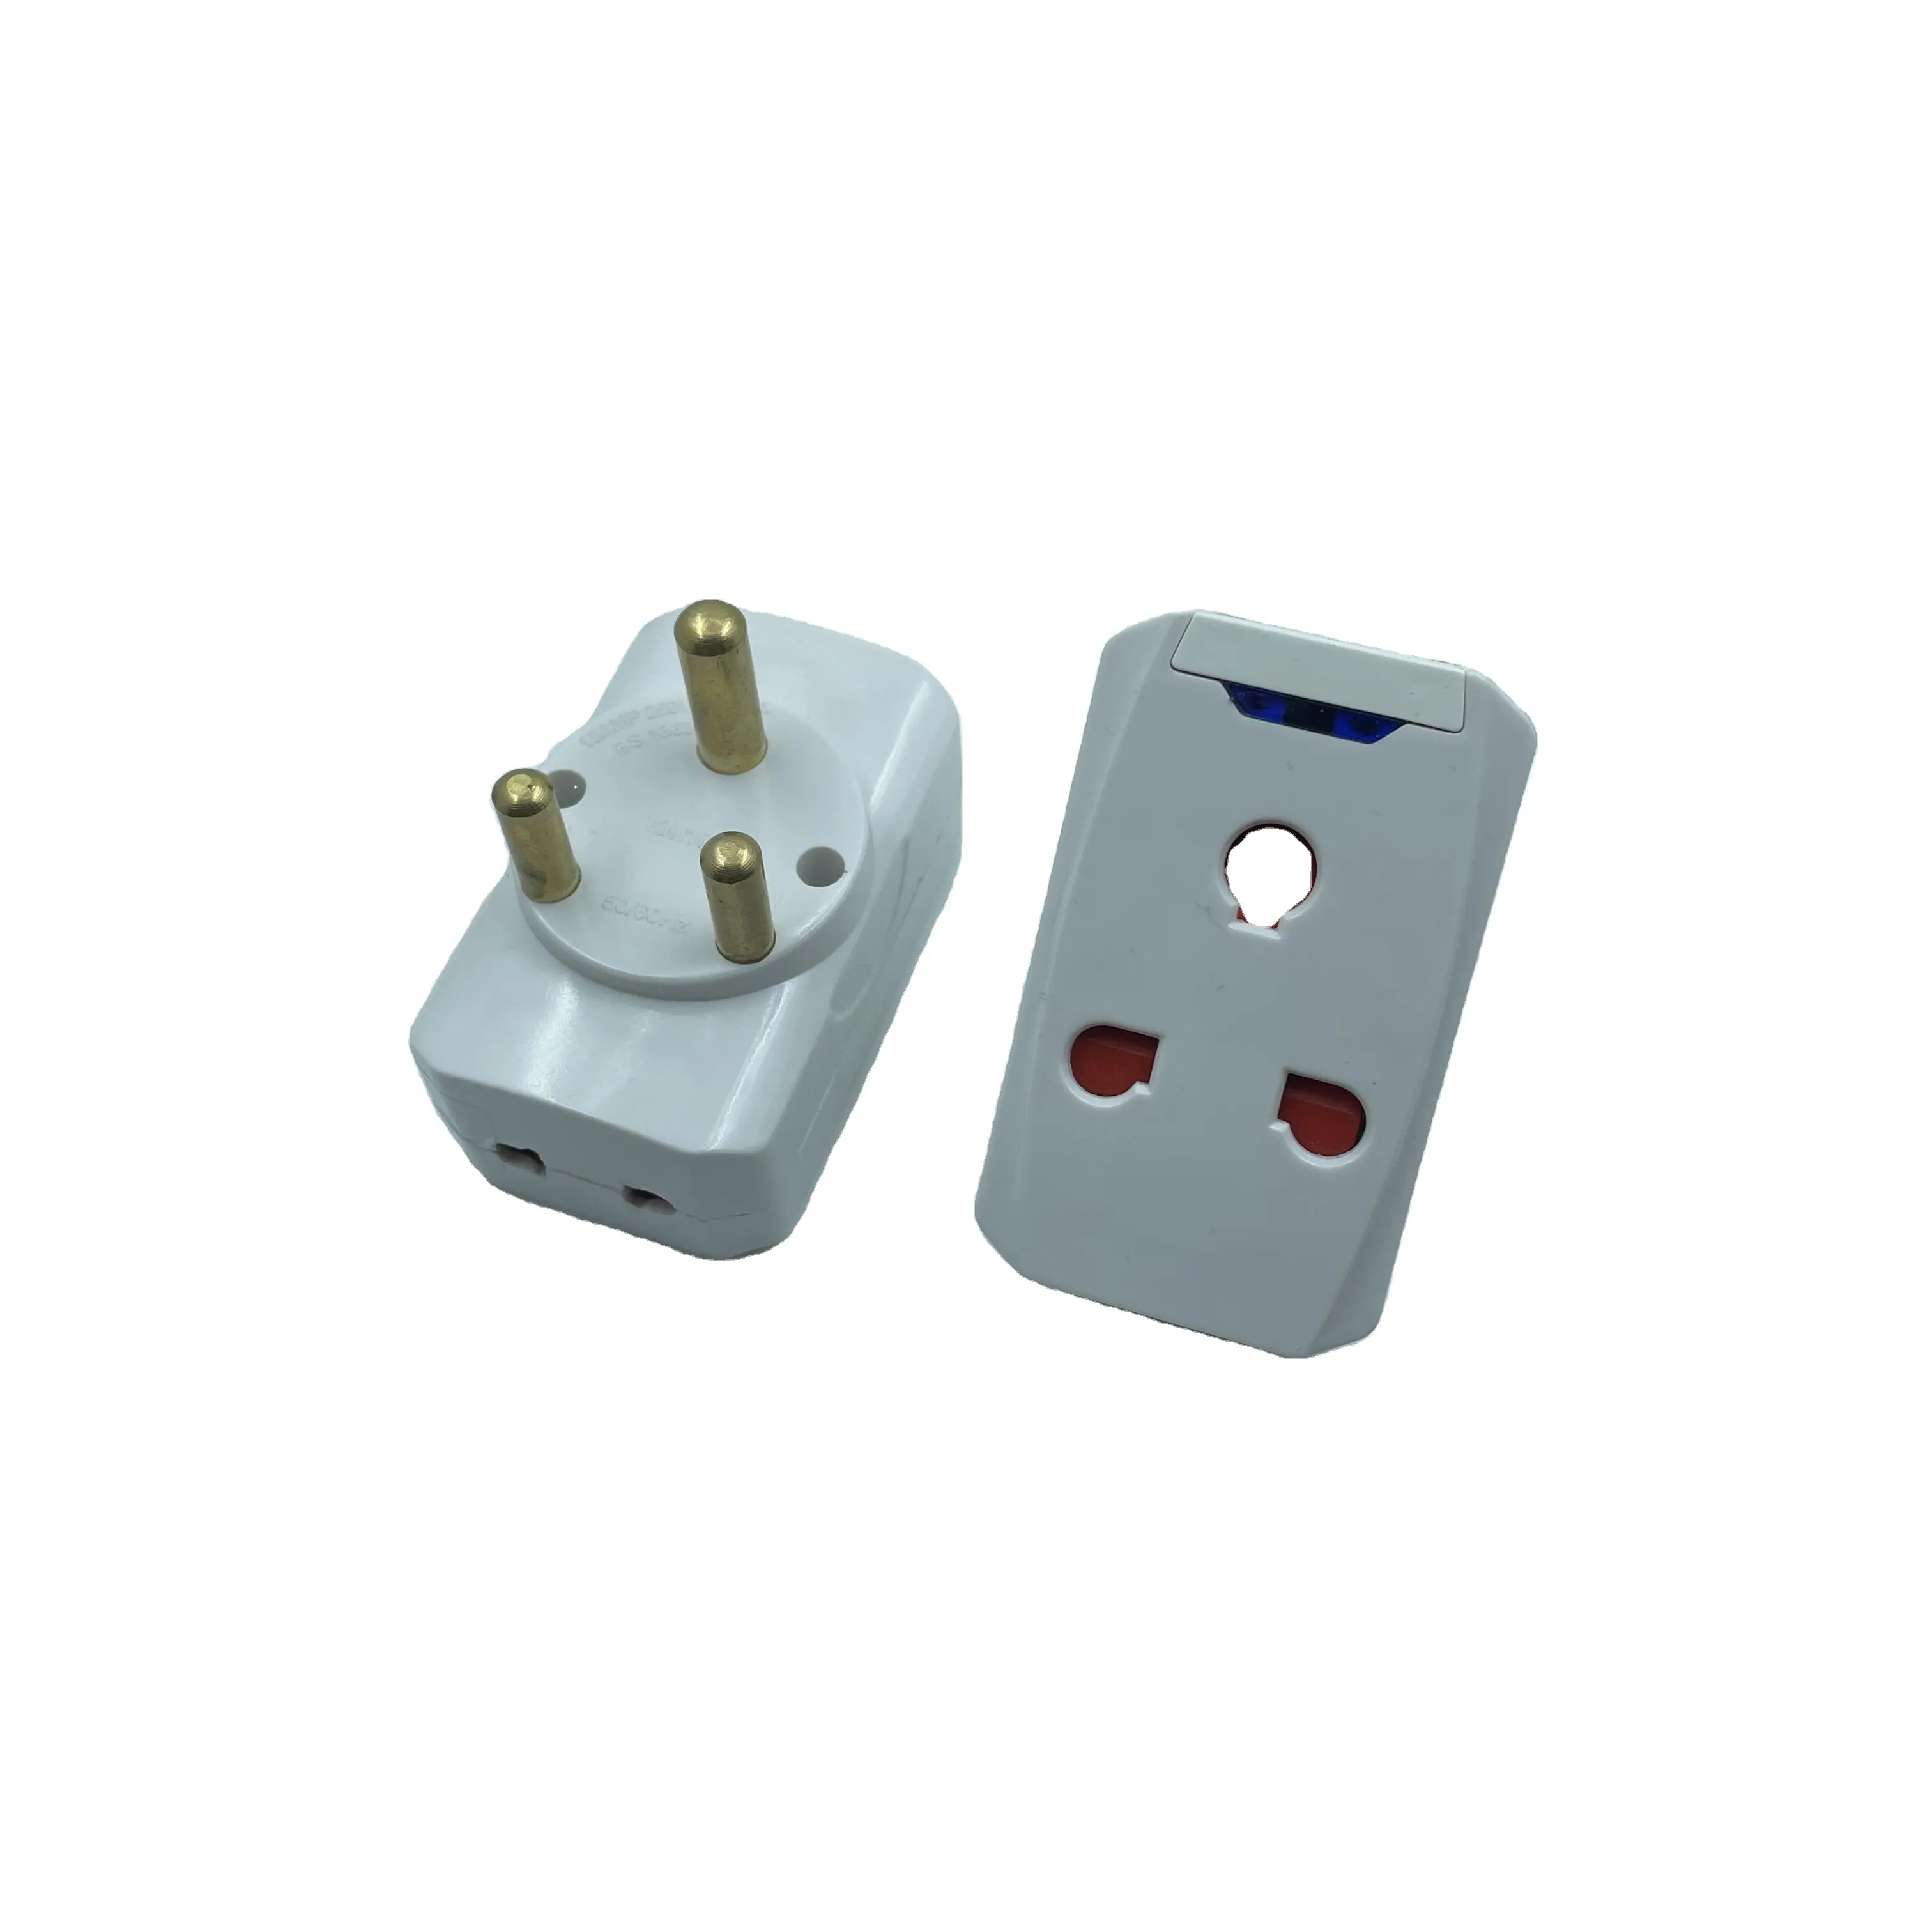 Travel adapter Plug Converter English plug 15A multi-purpose plug with indicator light